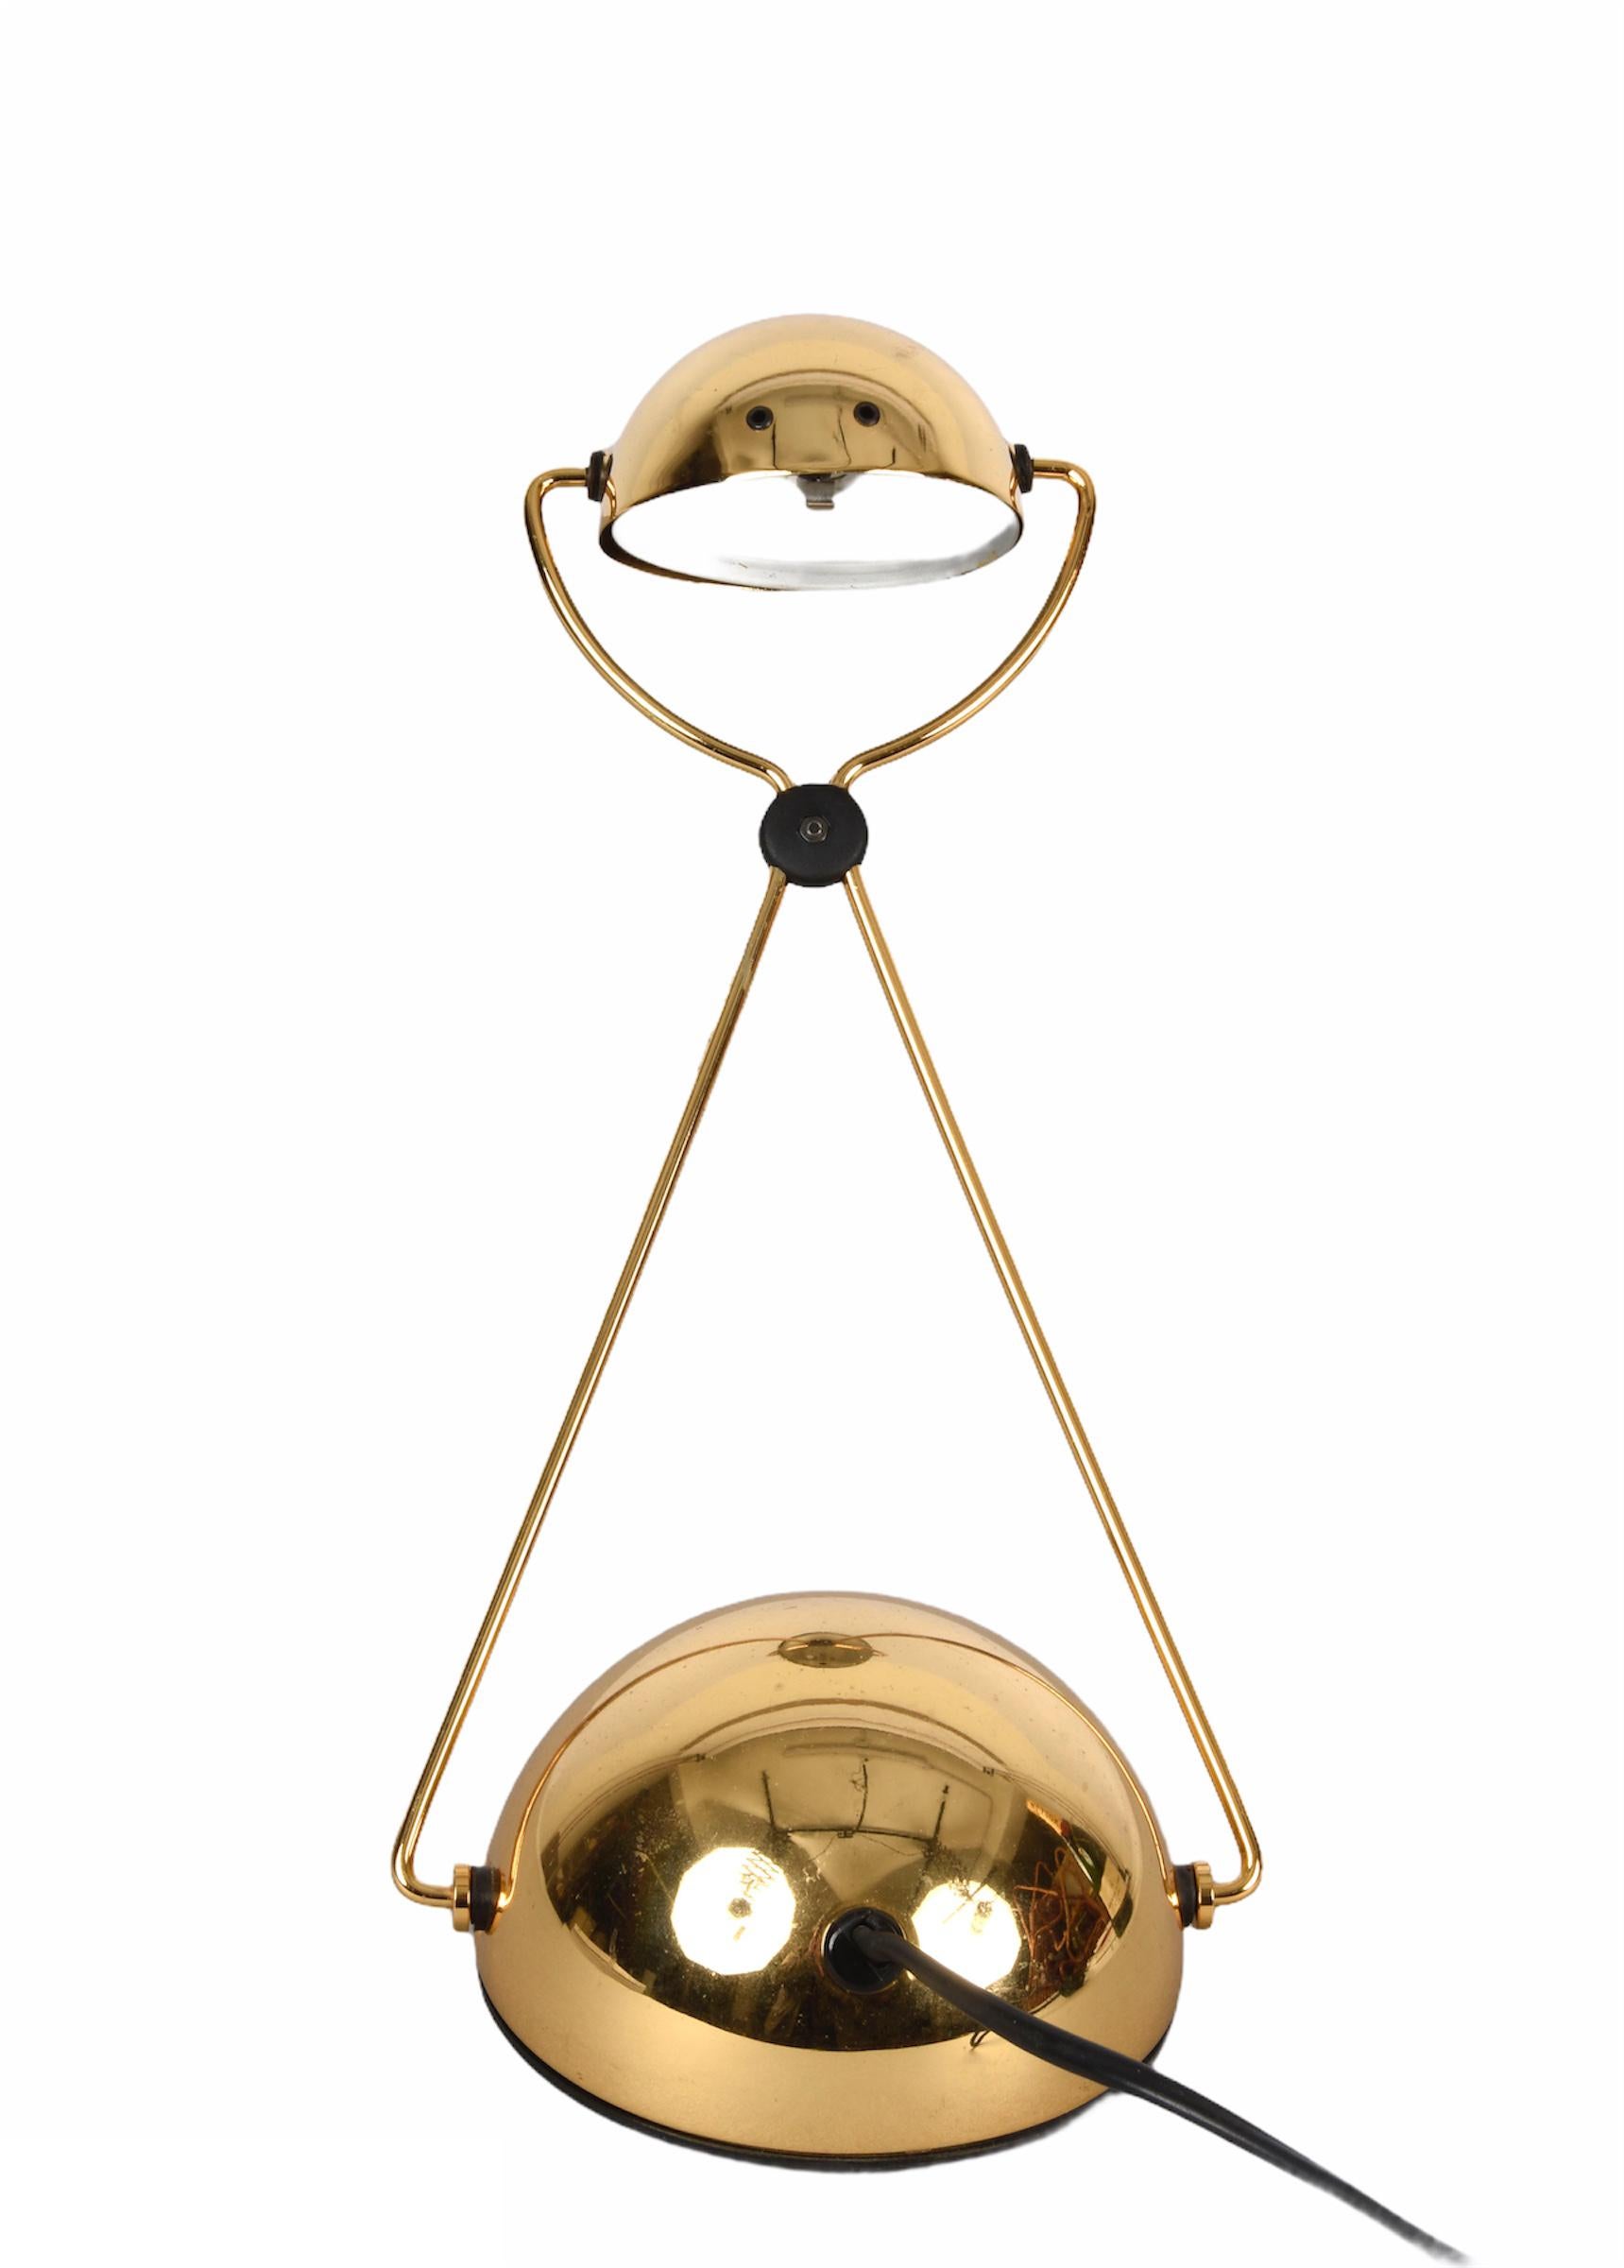 Stefano Cevoli Midcentury Gold-Plated Metal Italian Table Lamp 'Meridiana' 1980s For Sale 1